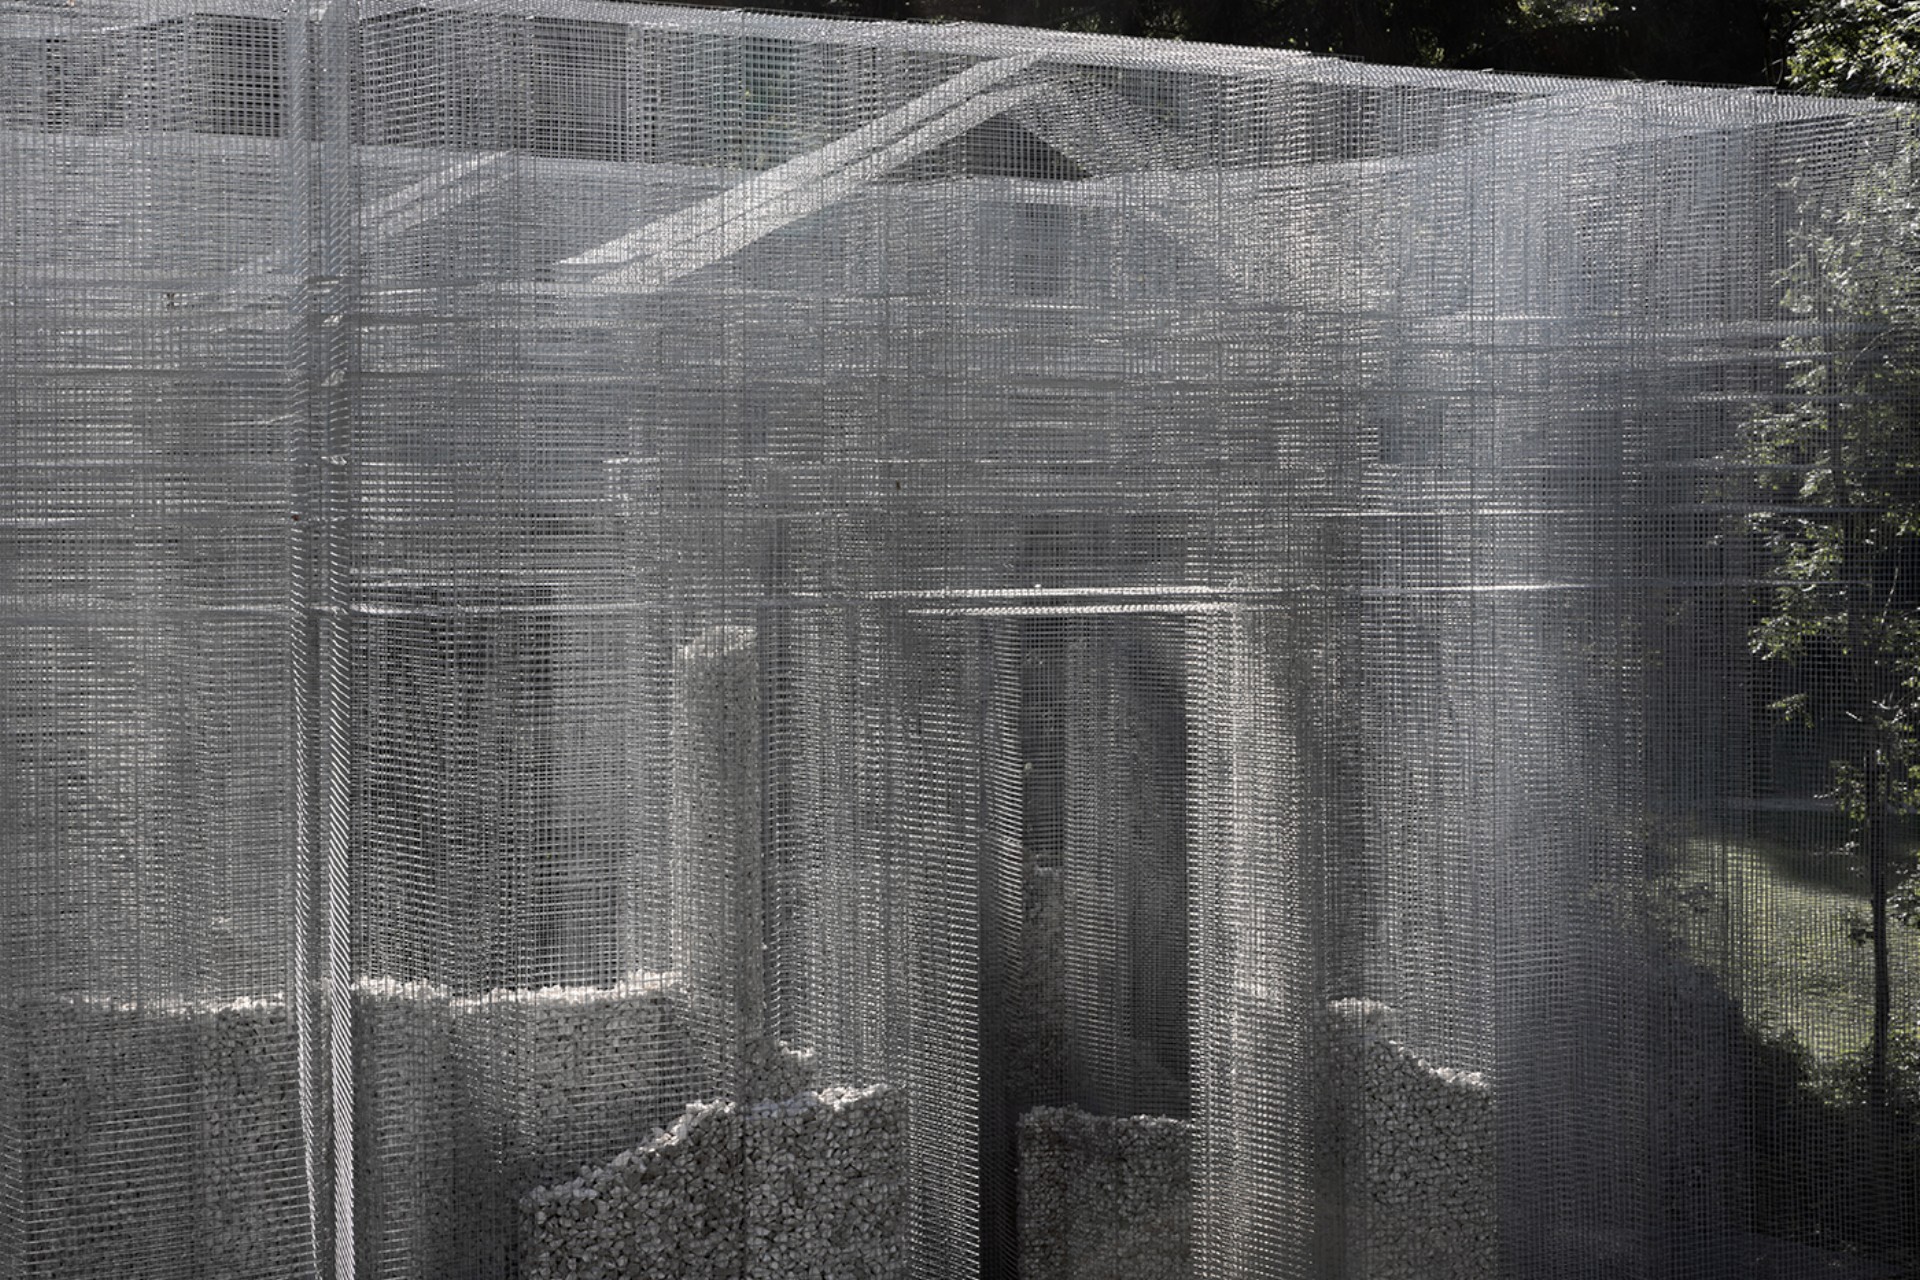 edoardo tresoldi suspends mesh and metal architectural ruins